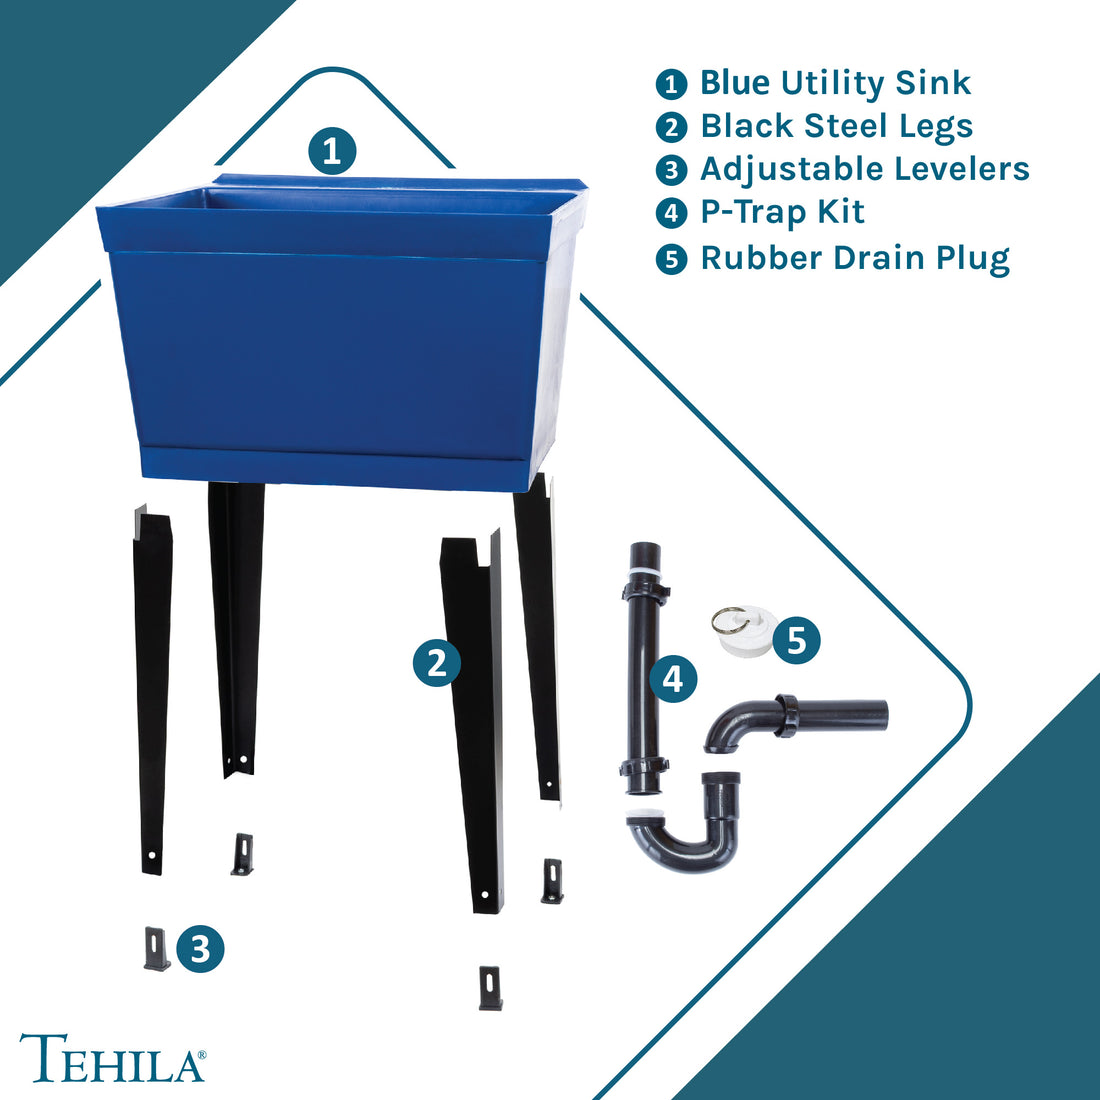 Blue Standard Utility Sink Contents Blue Utility Sink | Black Steel Legs | Adjustable Levelers | P-Trap Kit | Rubber Drain Plug